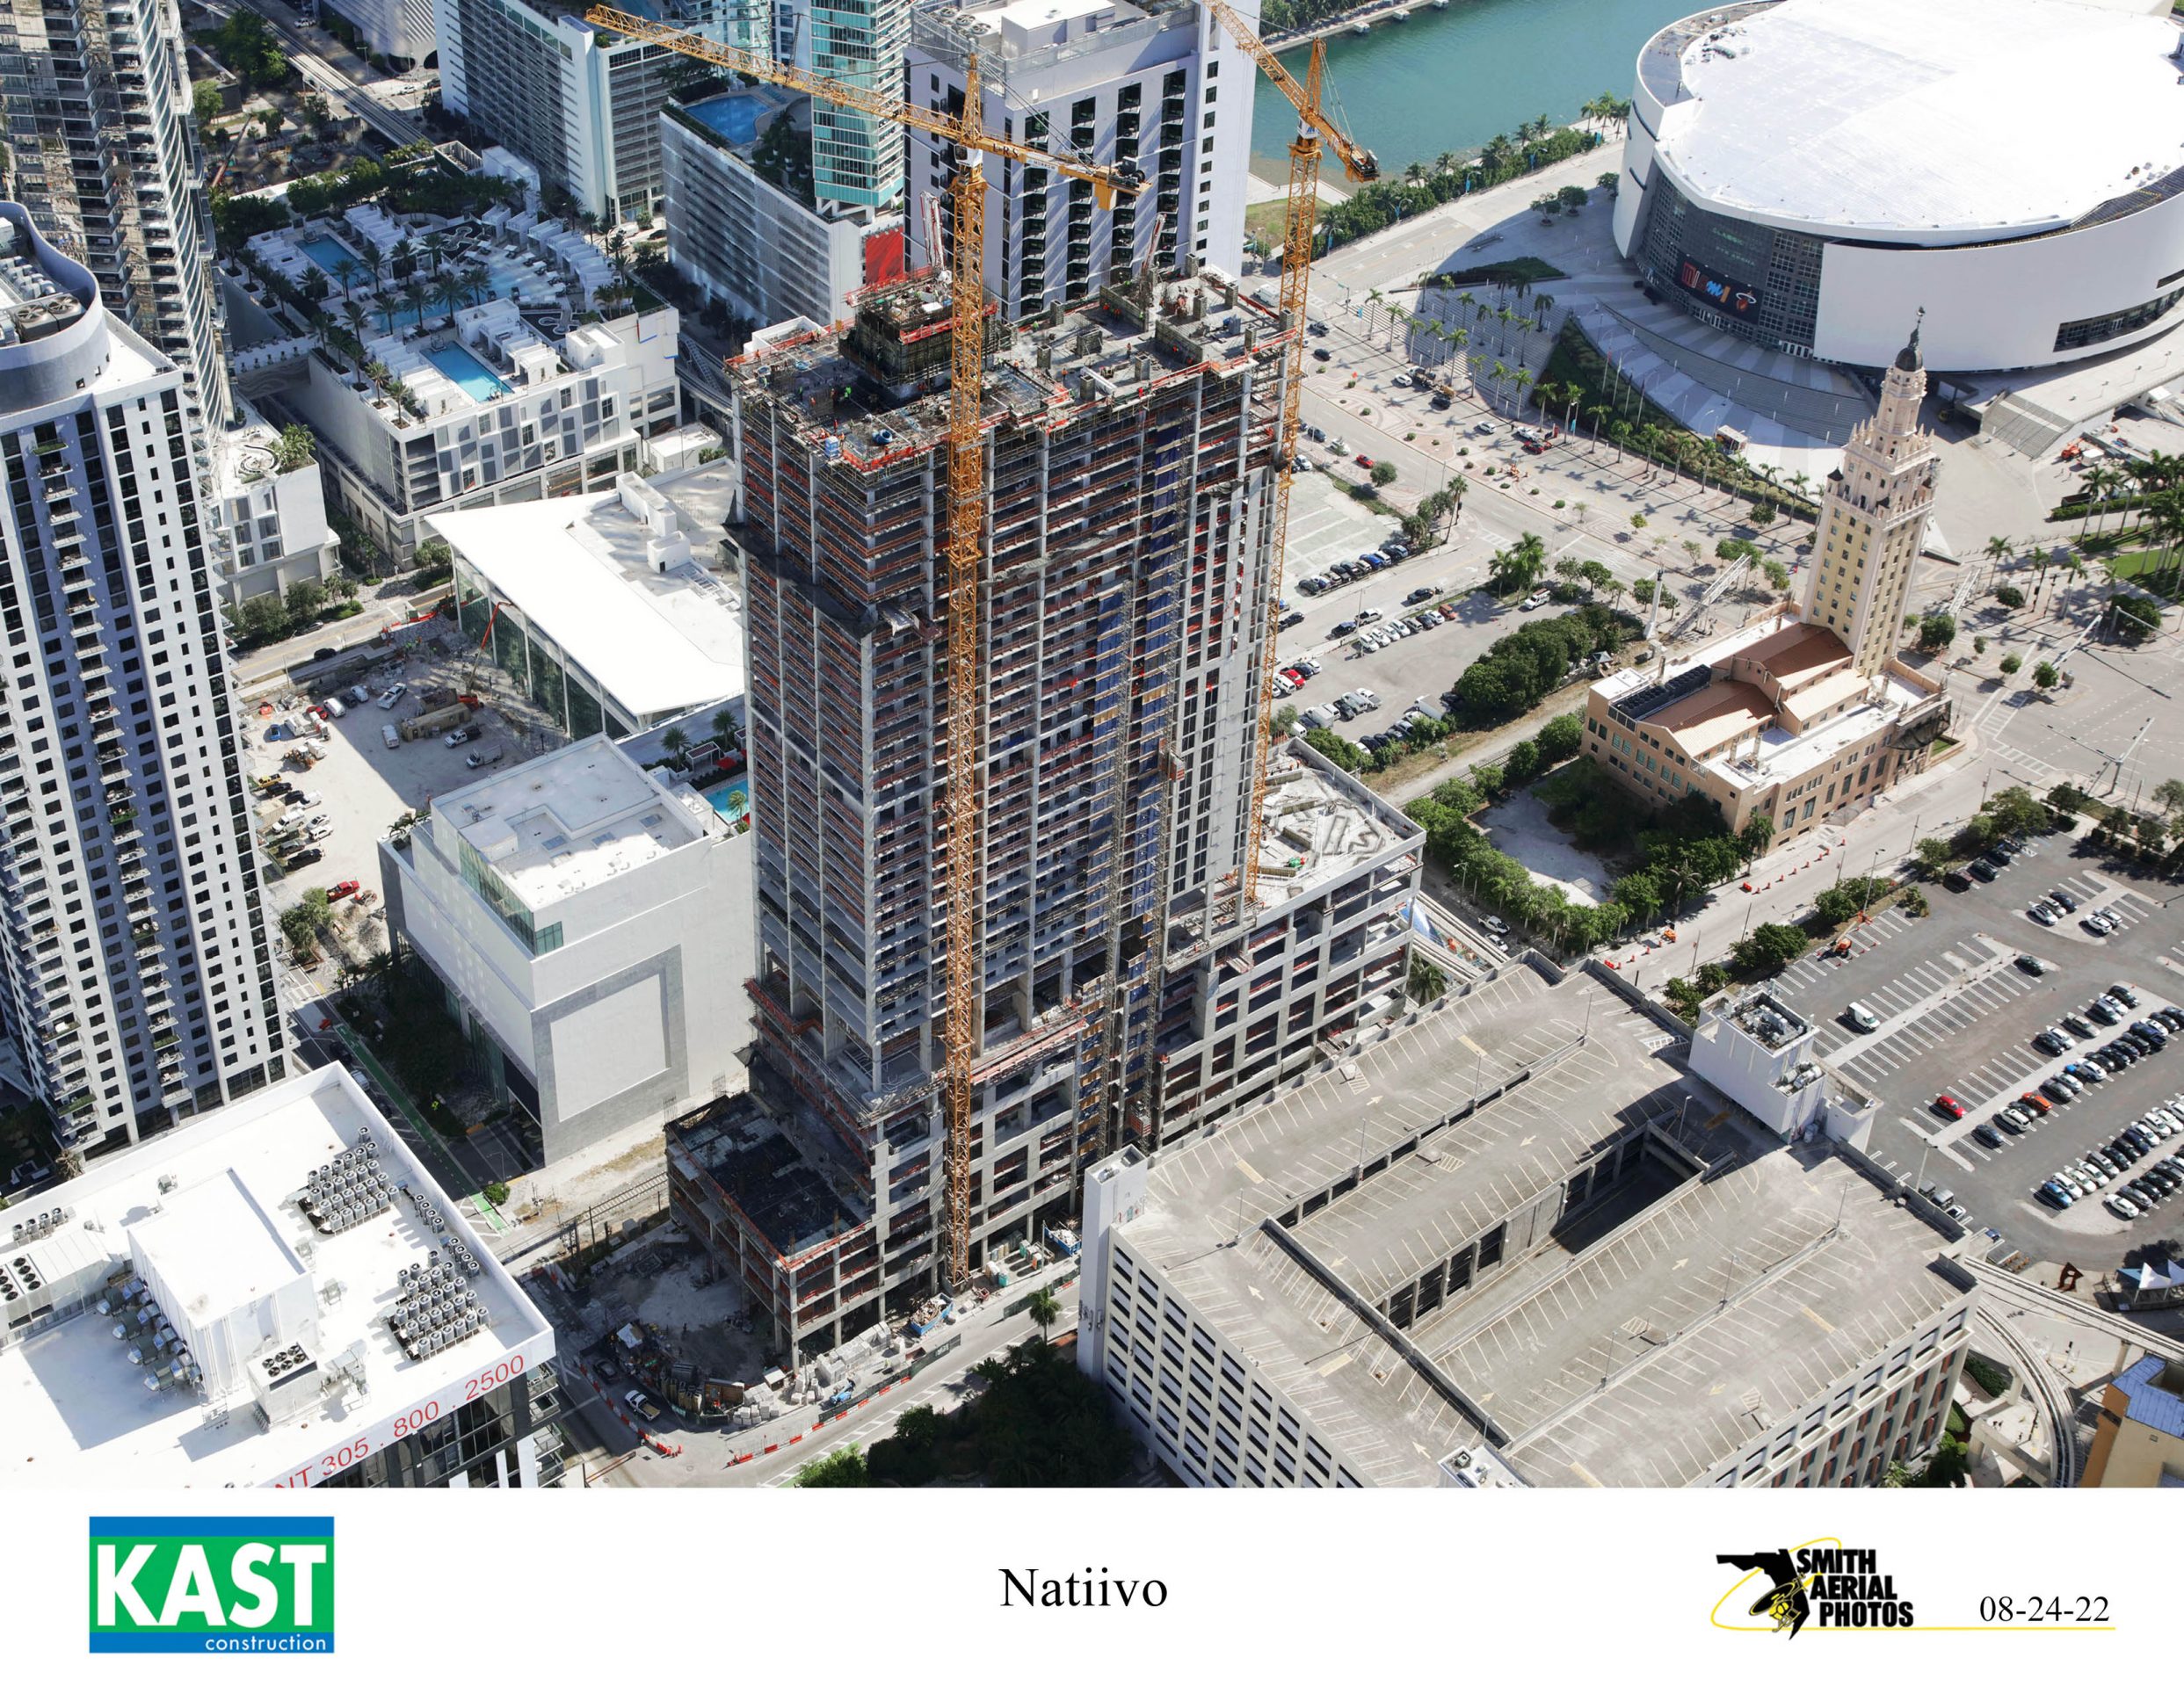 Natiivo Miami building construction